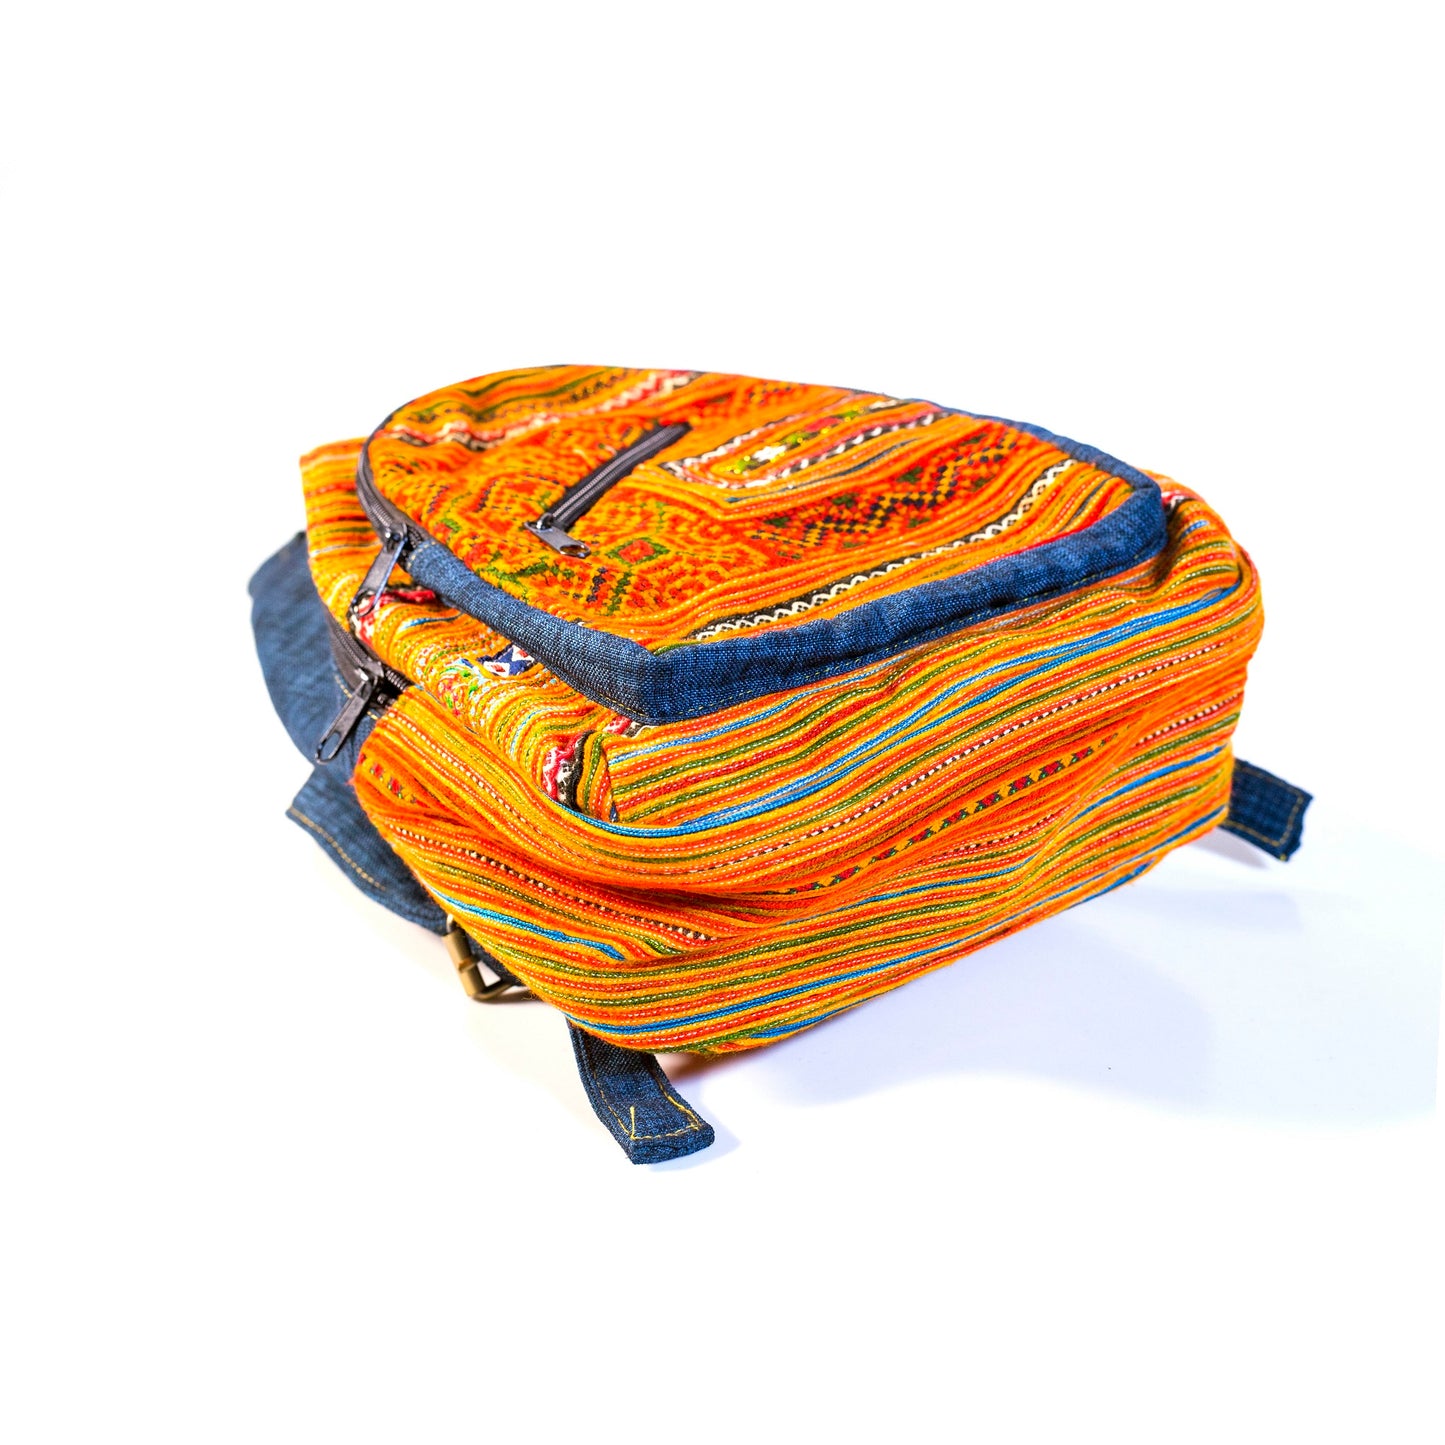 Multi-purpose backpack and sling, orange blue hand-embroidery fabric, dark blue trim